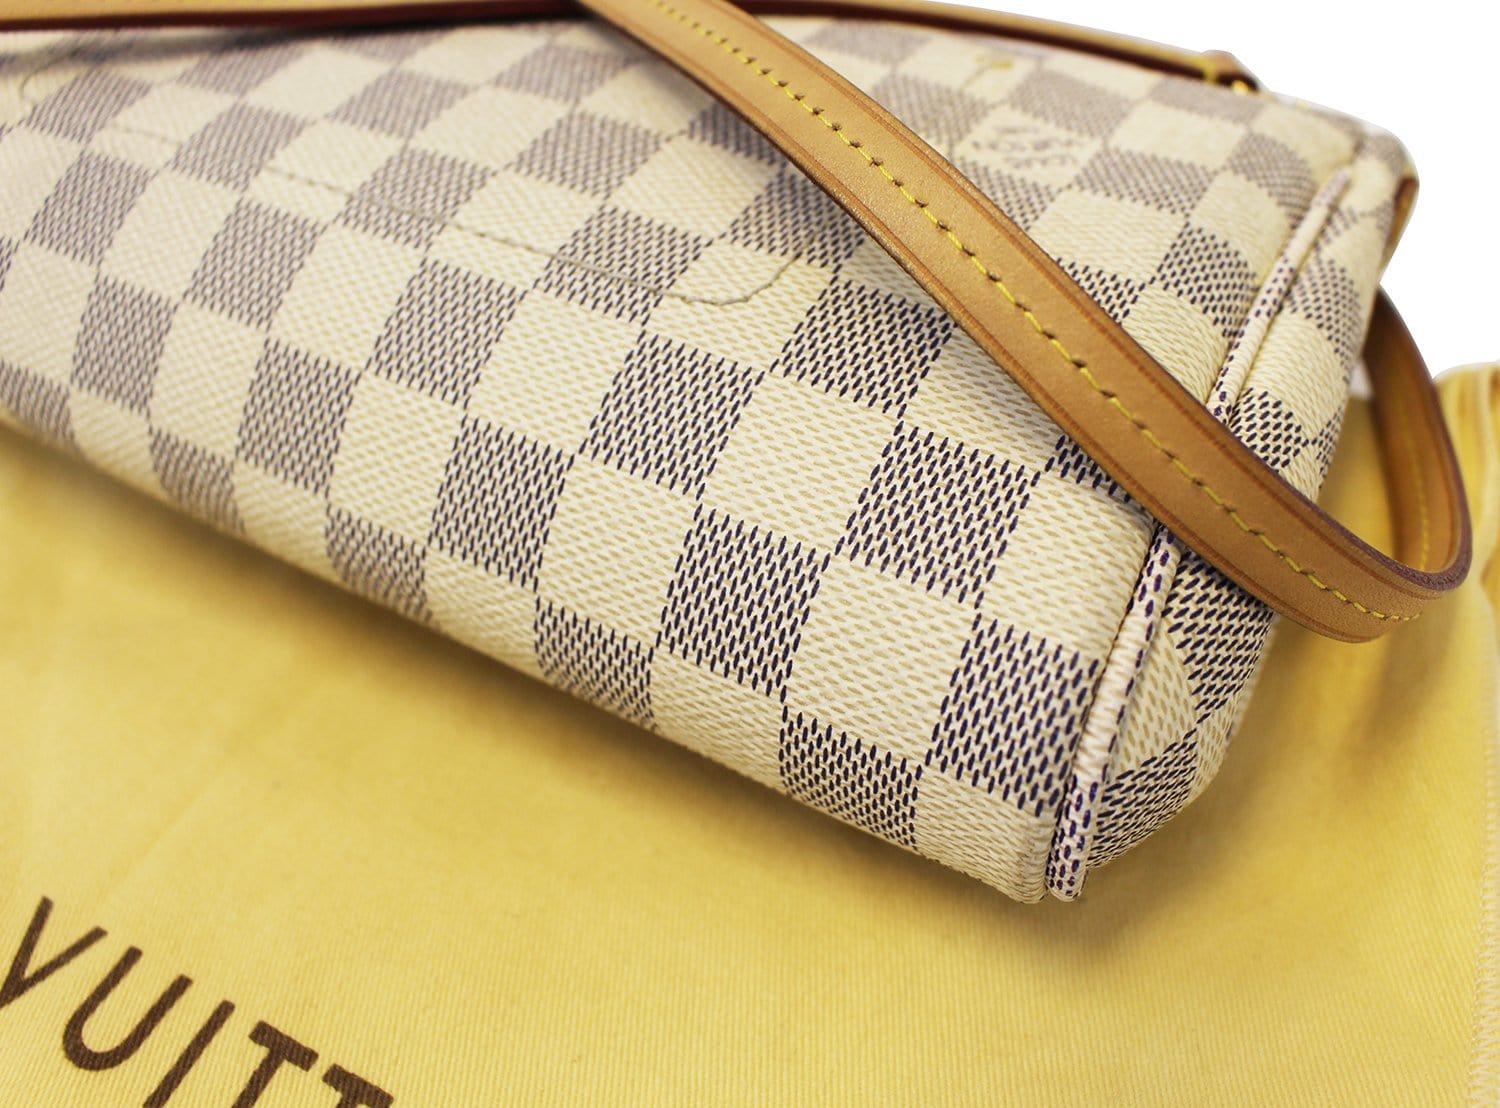 Louis Vuitton Damier Azur Favorite 2way Crossbody Bag 862920